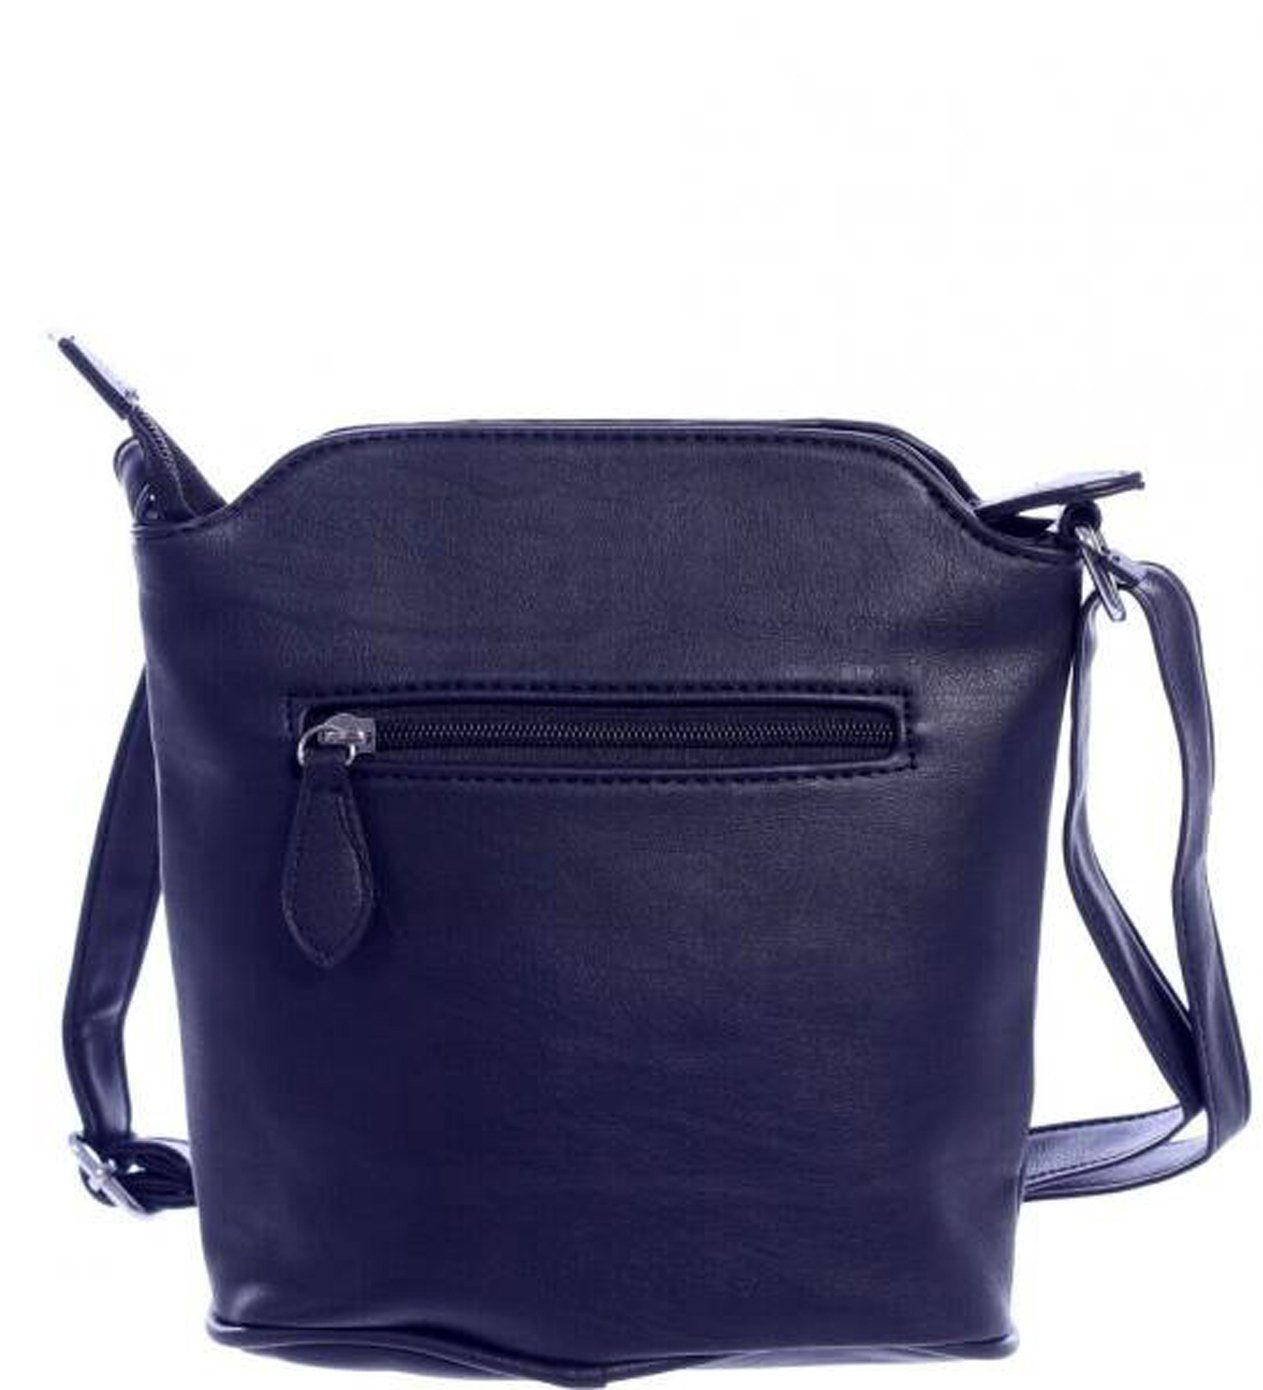 Small Moda Charis Cool City Stylisch Bag Lederimitat Schultertasche